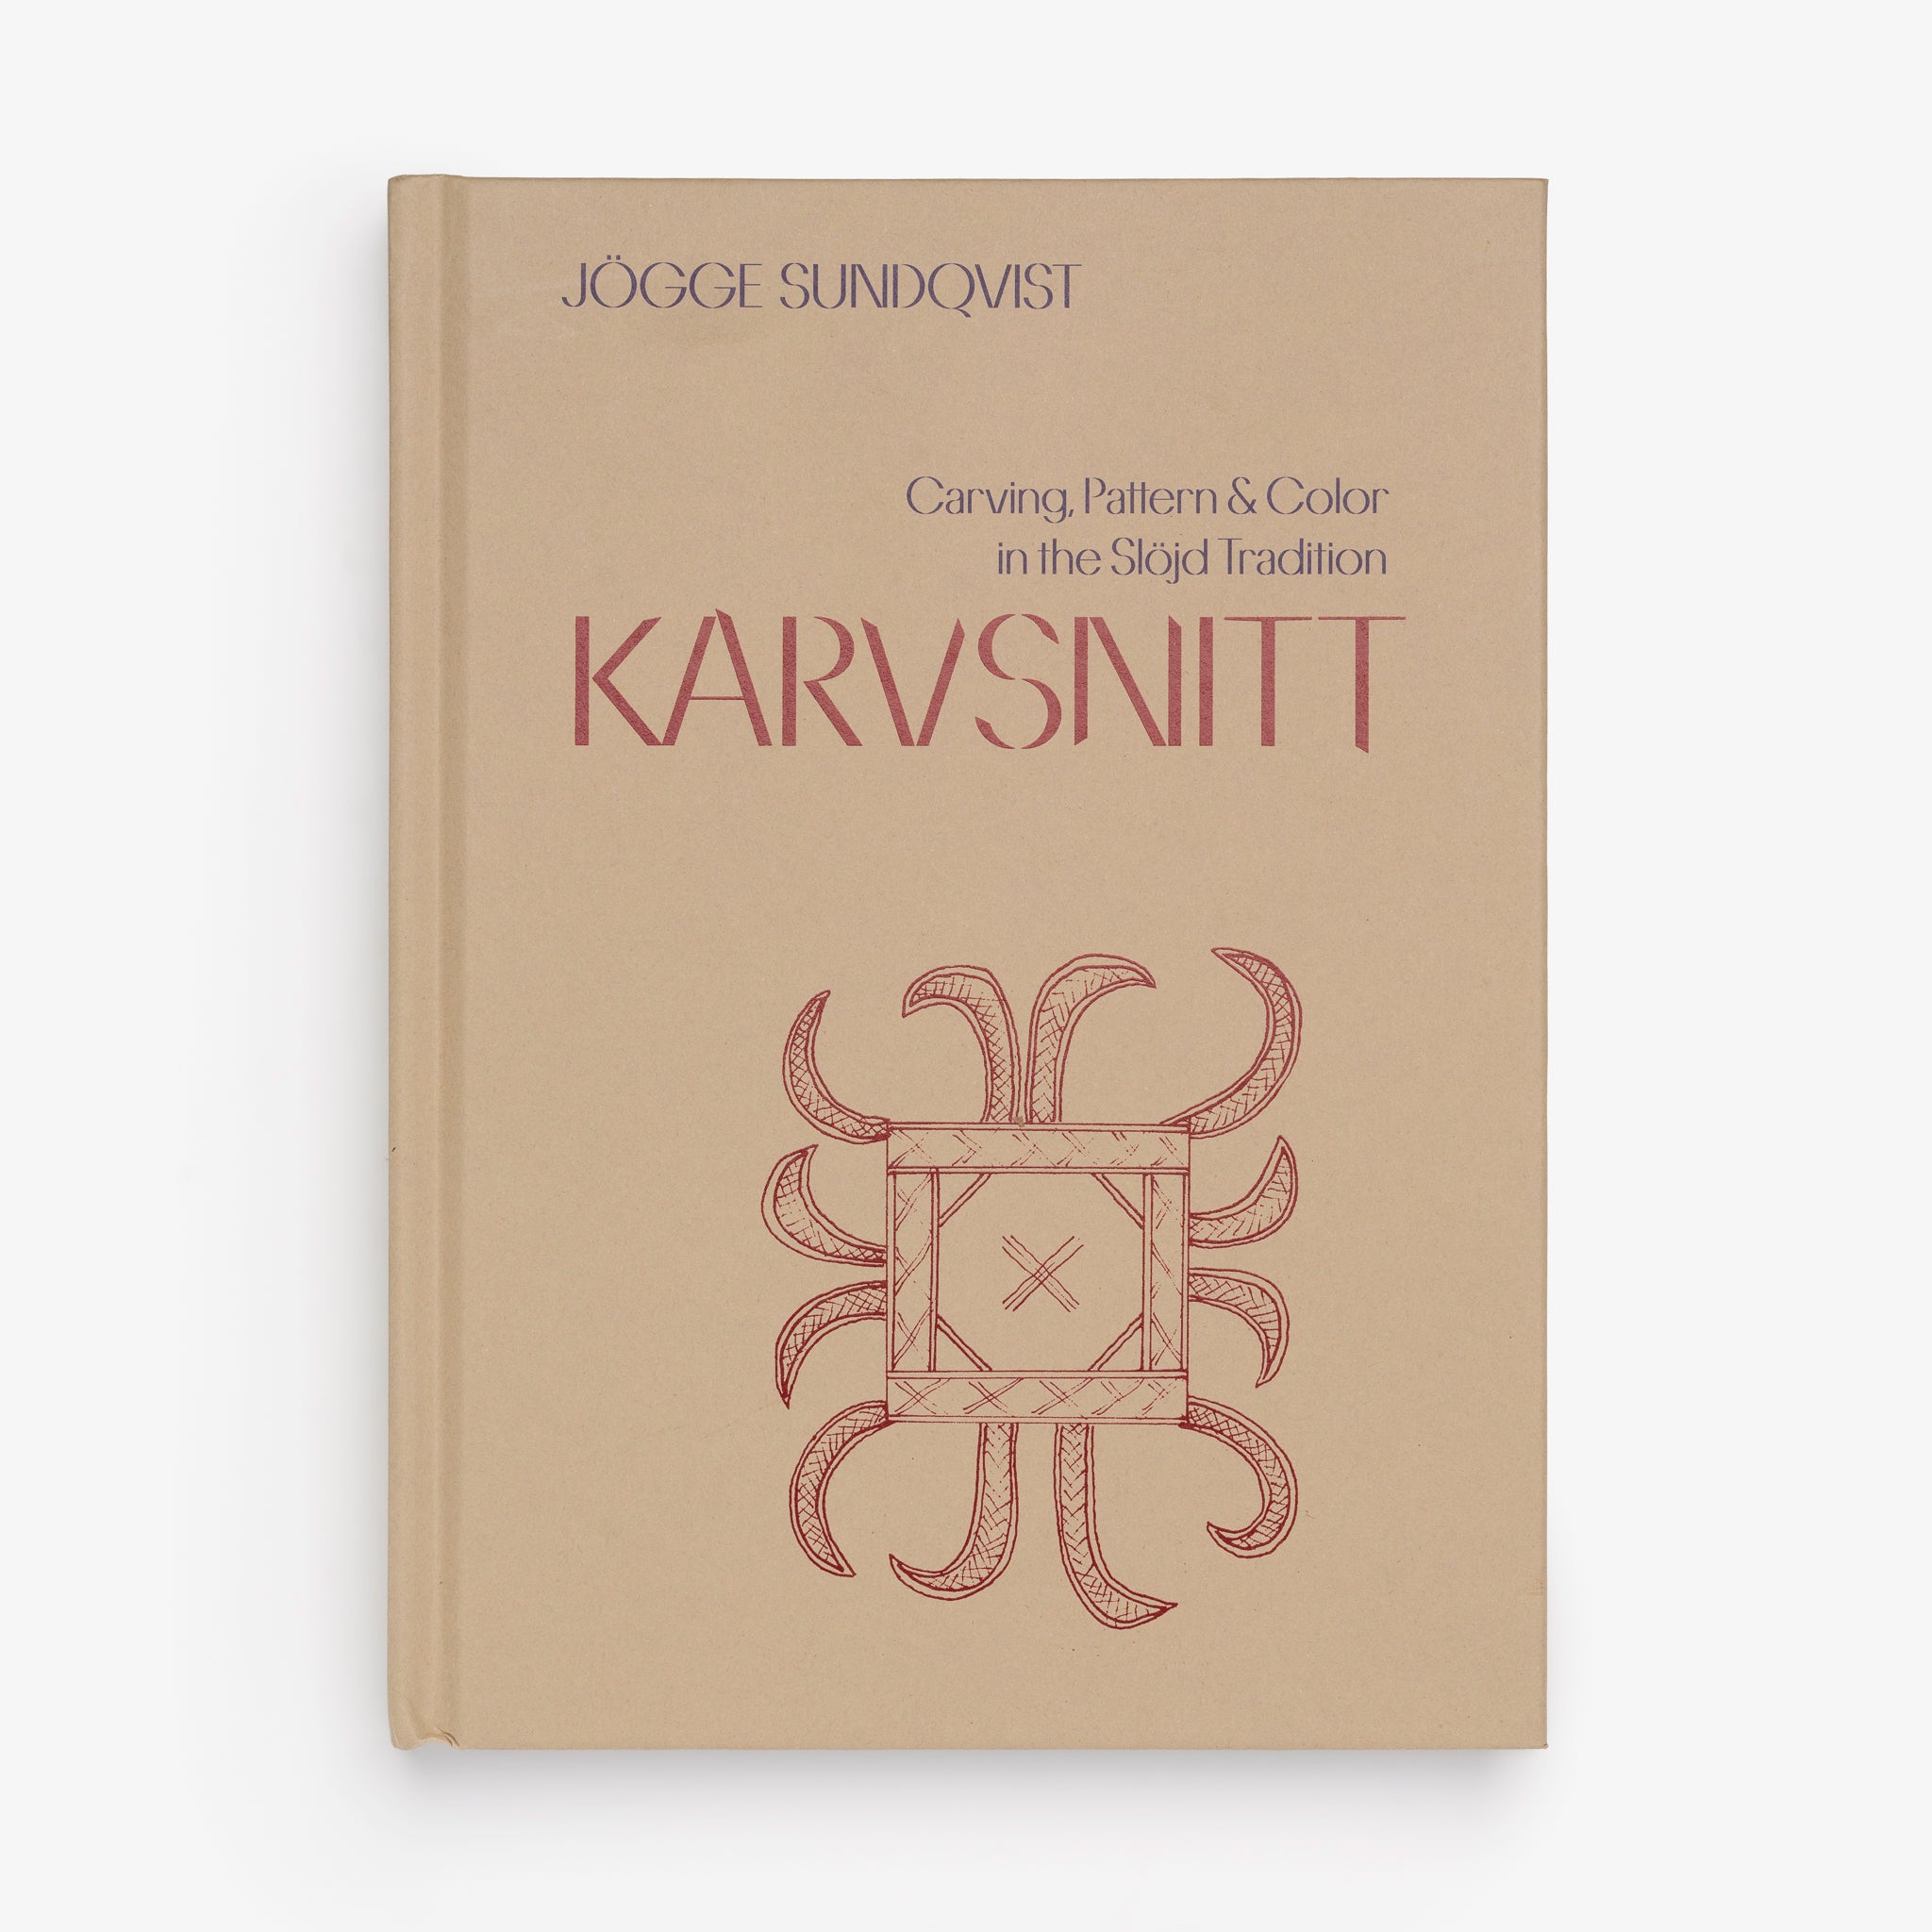 Karvsnitt: Carving, Pattern & Color in the Slöjd Tradition by Jögge Sundqvist